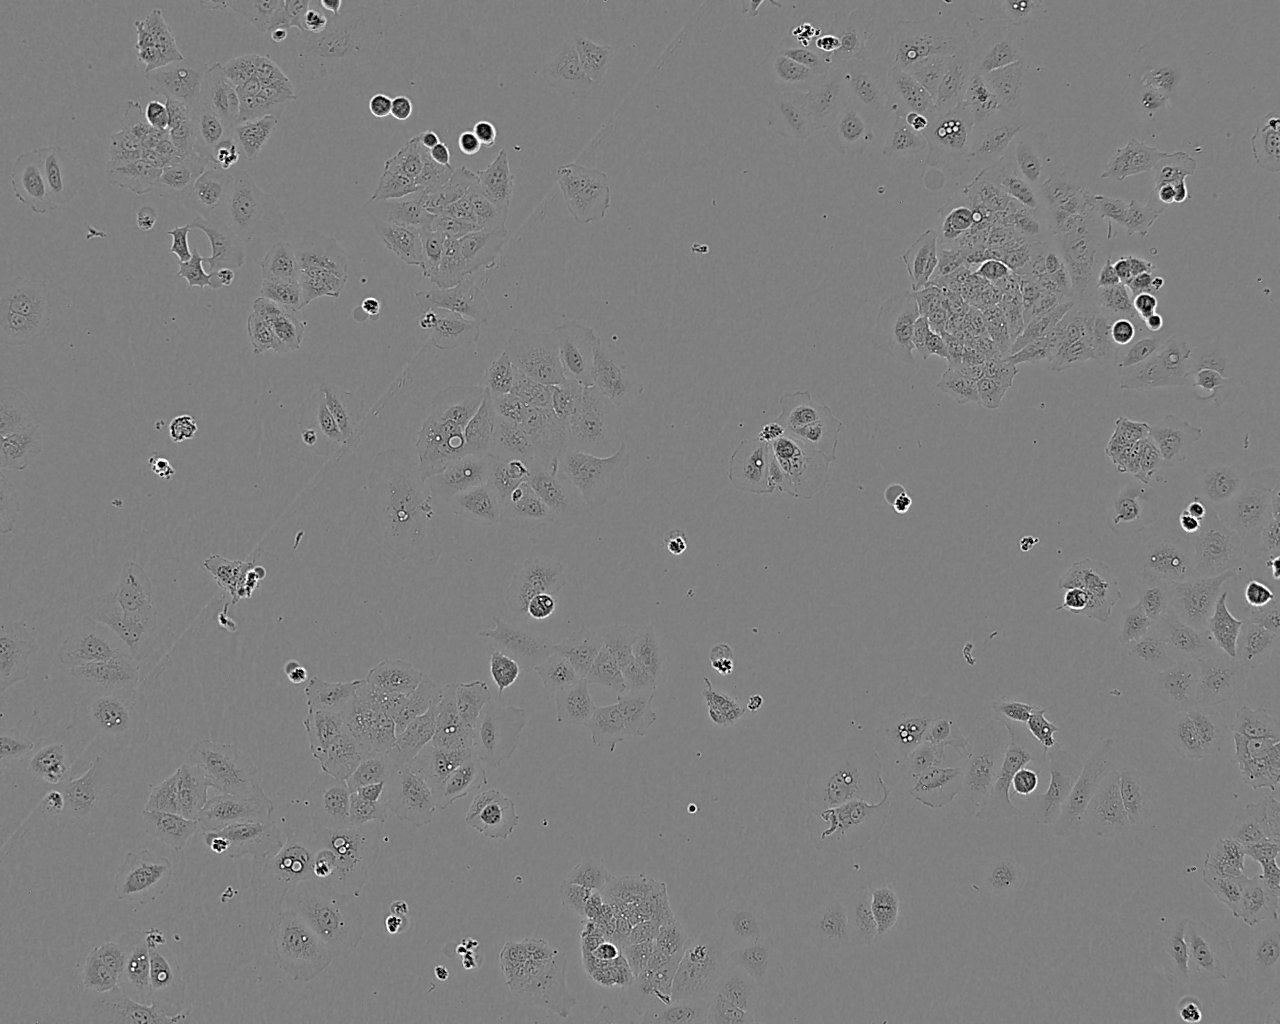 NCI-H441 epithelioid cells人肺腺癌细胞系,NCI-H441 epithelioid cells